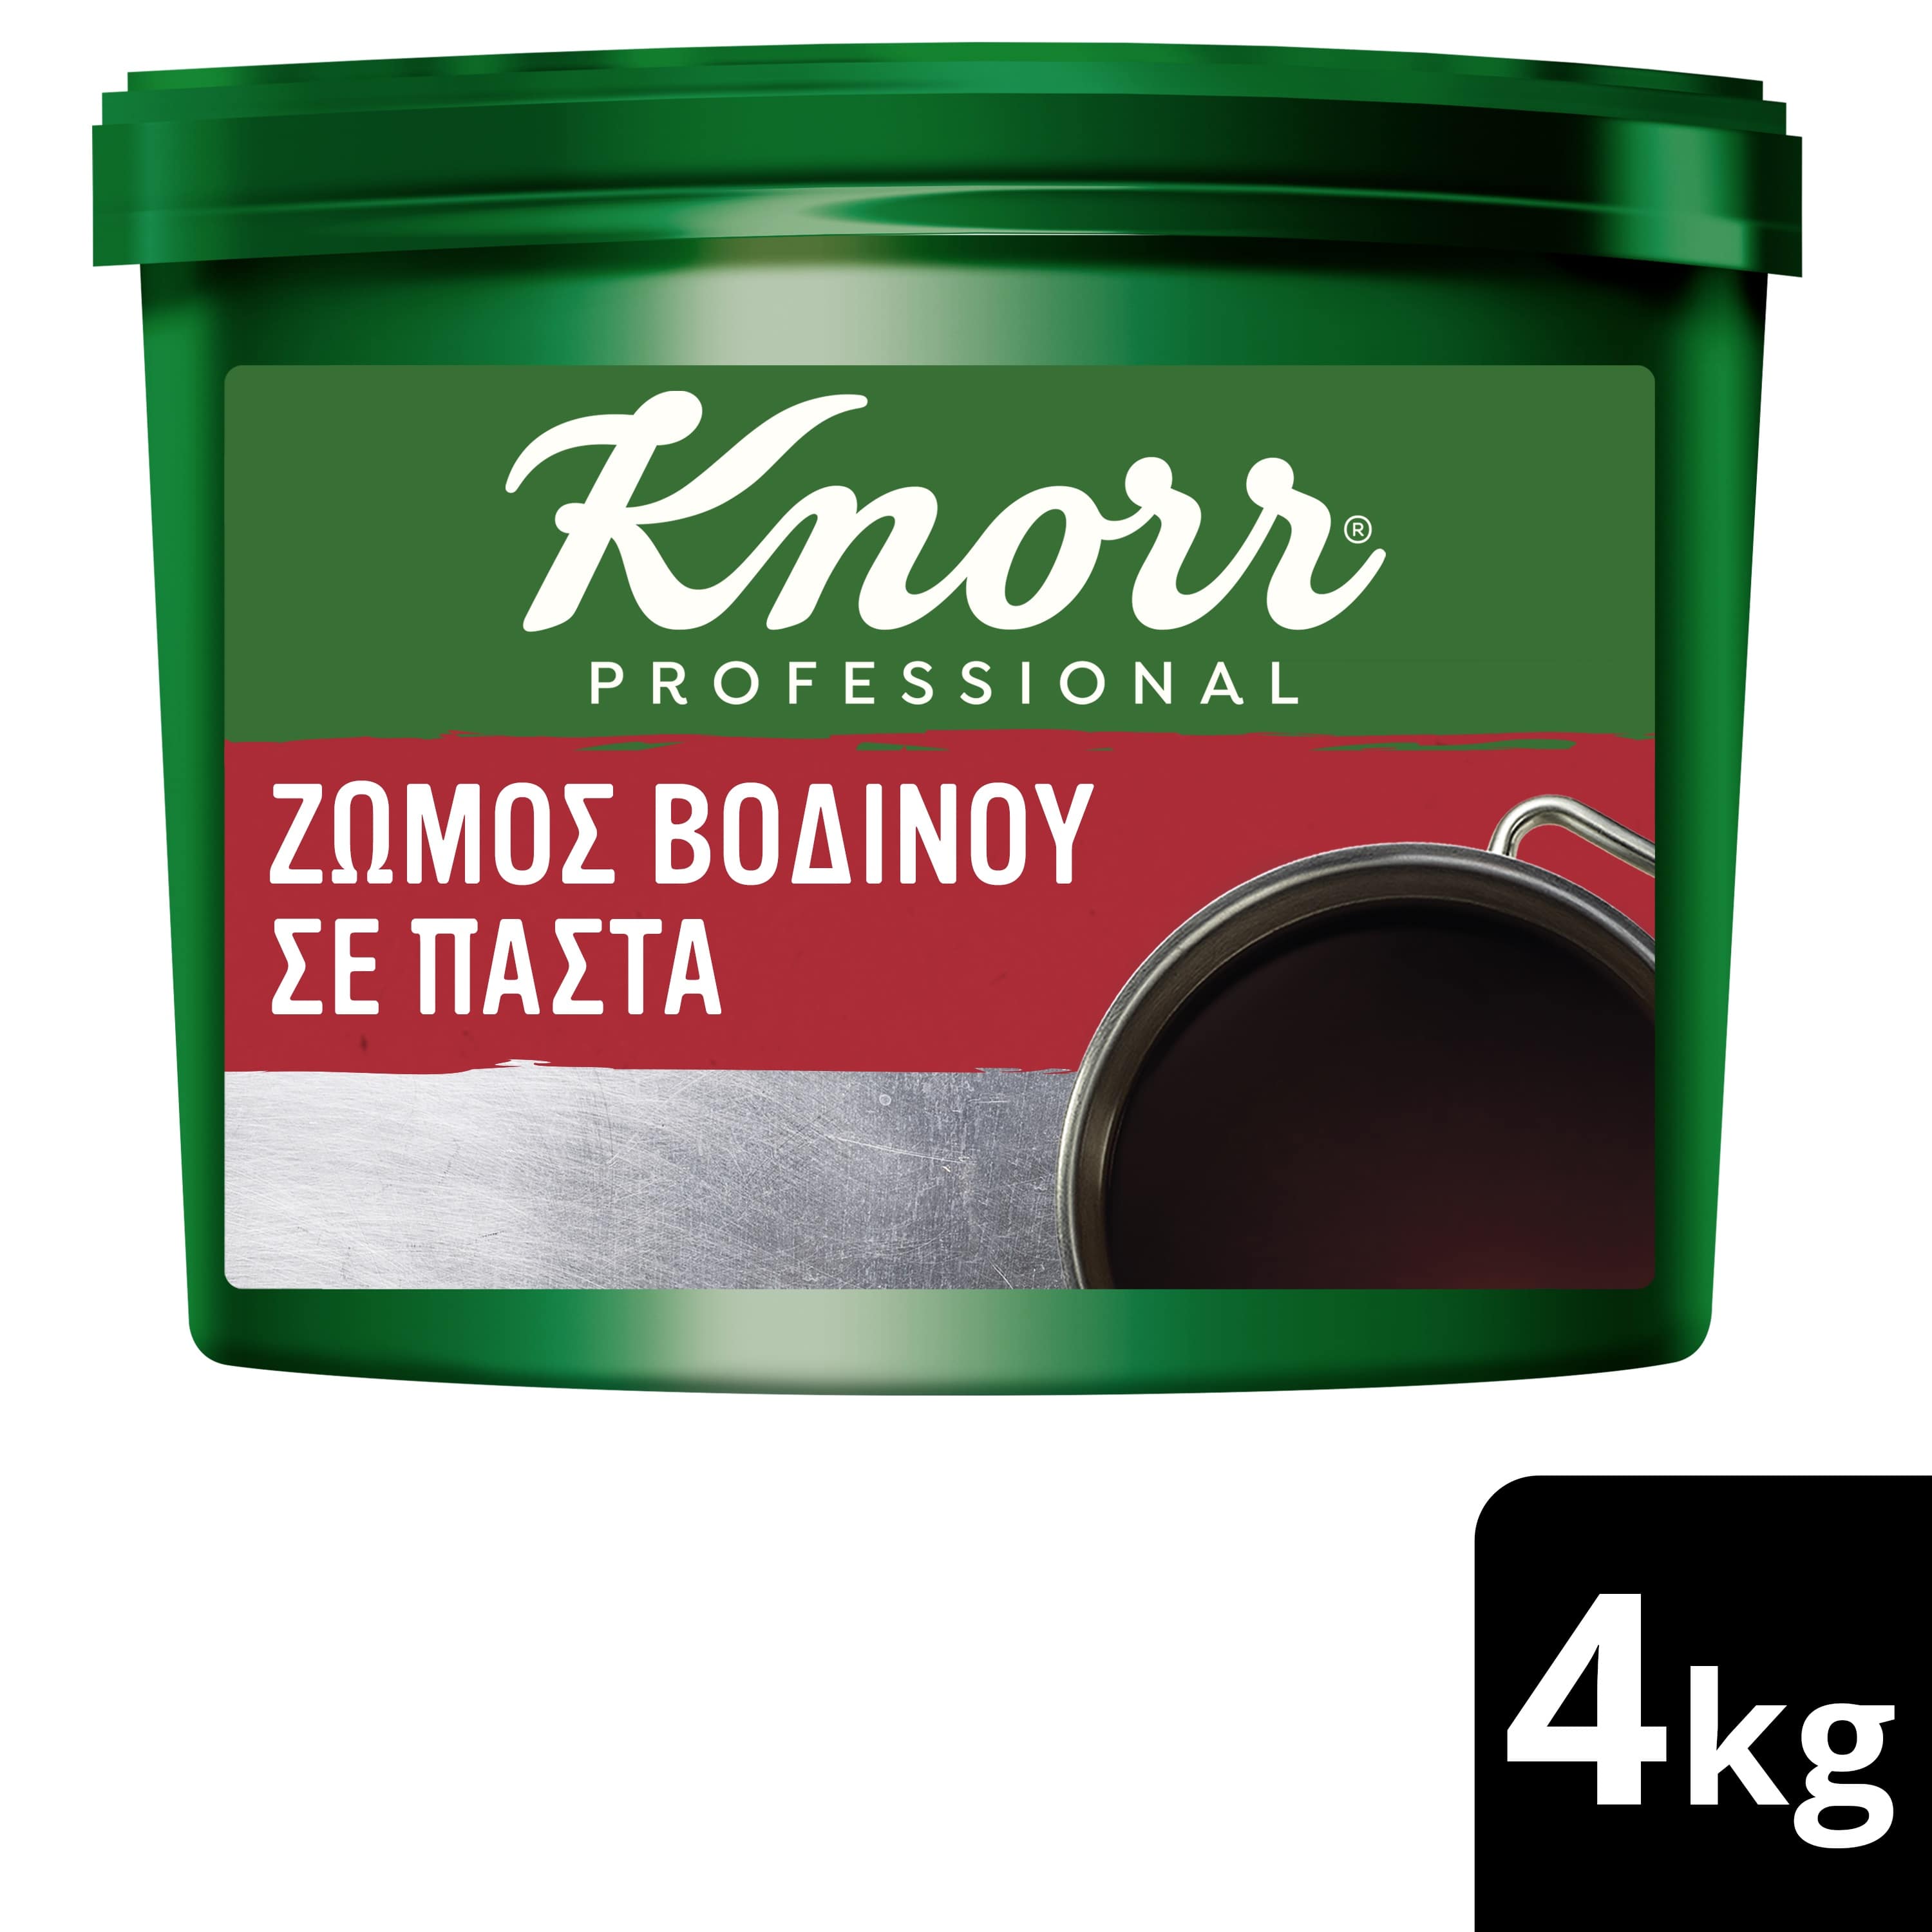 Knorr Ζωμός Βοδινού σε Πάστα 4 kg